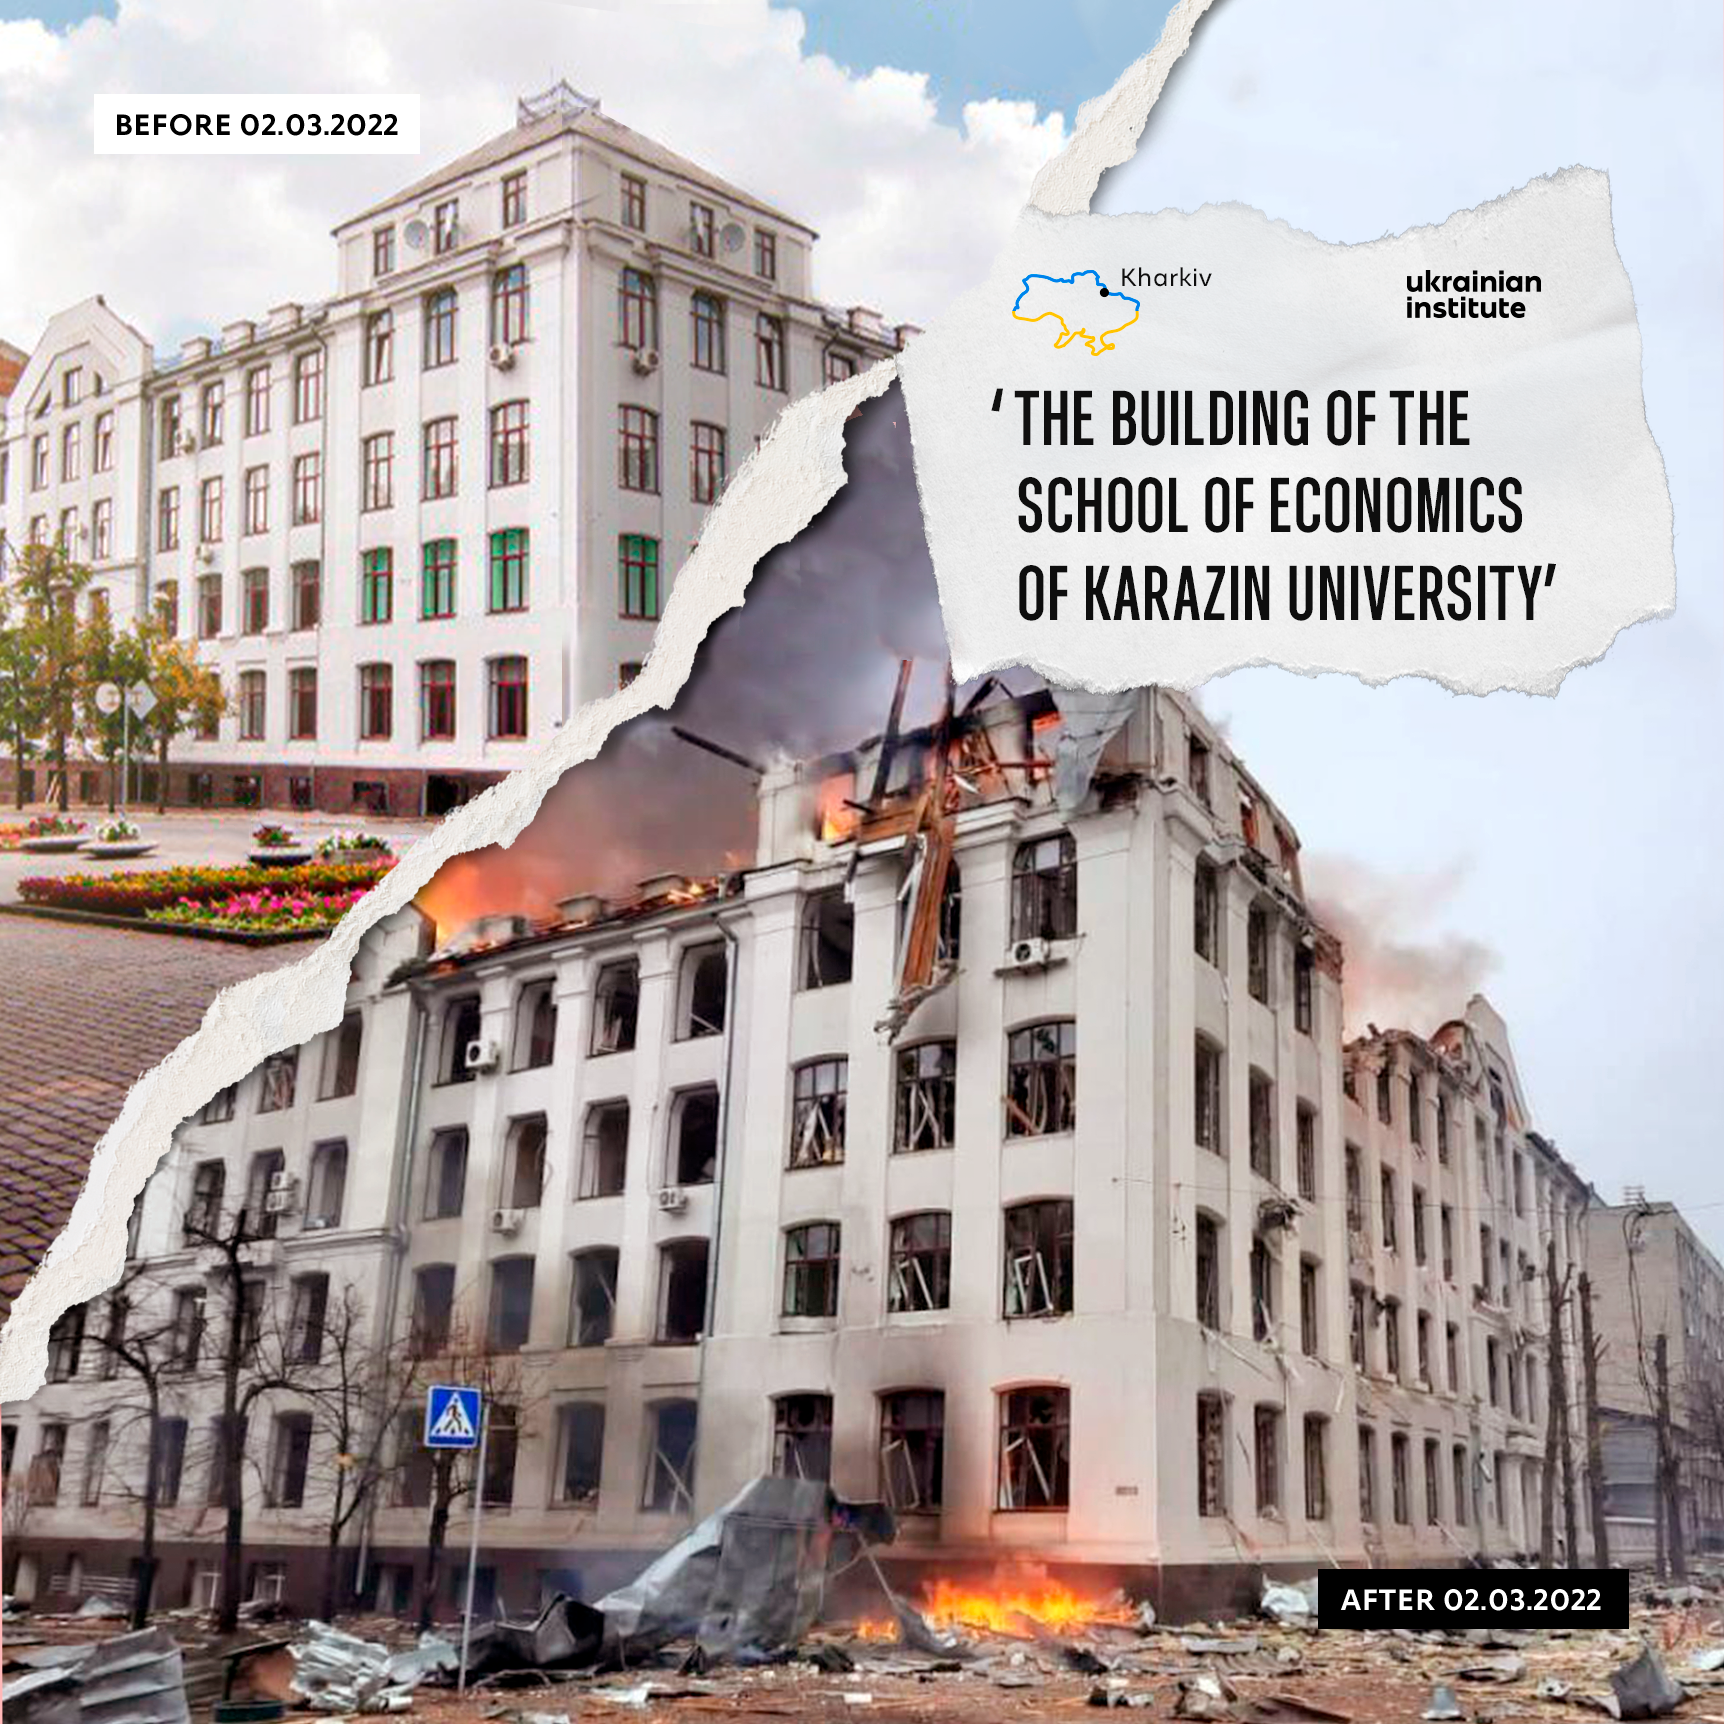 The building of the School of Economics of Karazin University